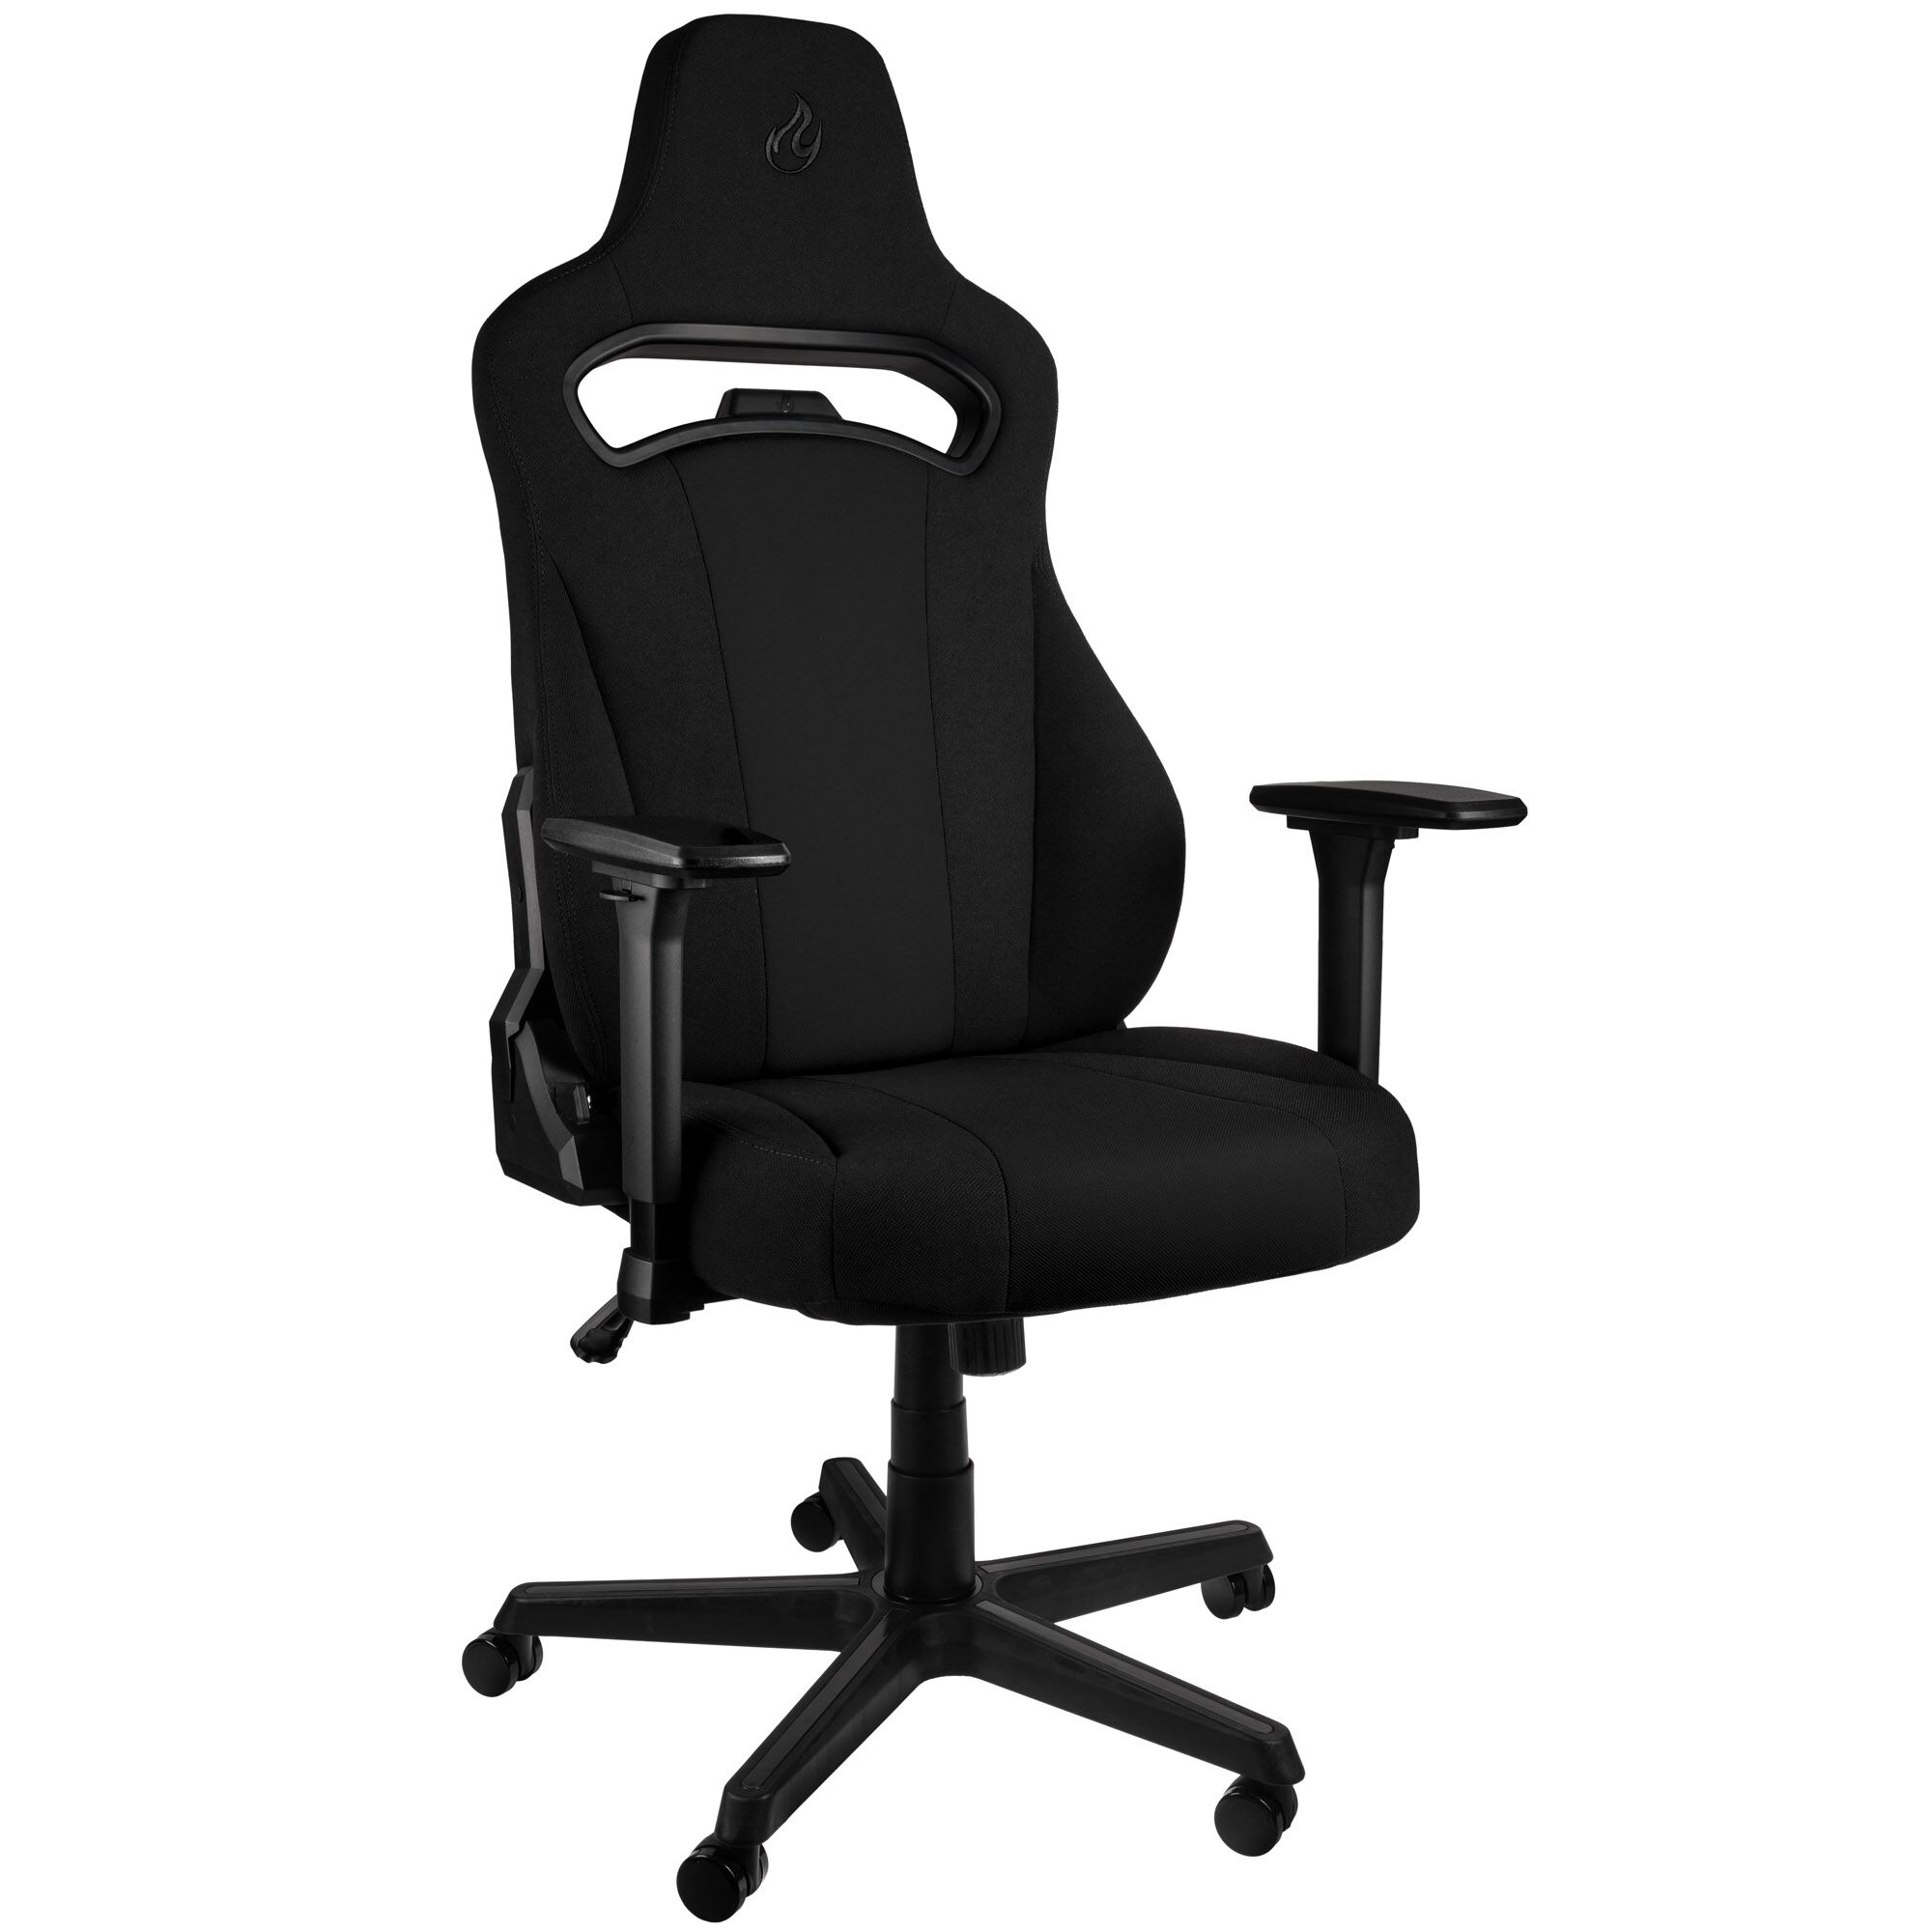 Nitro Concepts E250 Gaming Chair – black